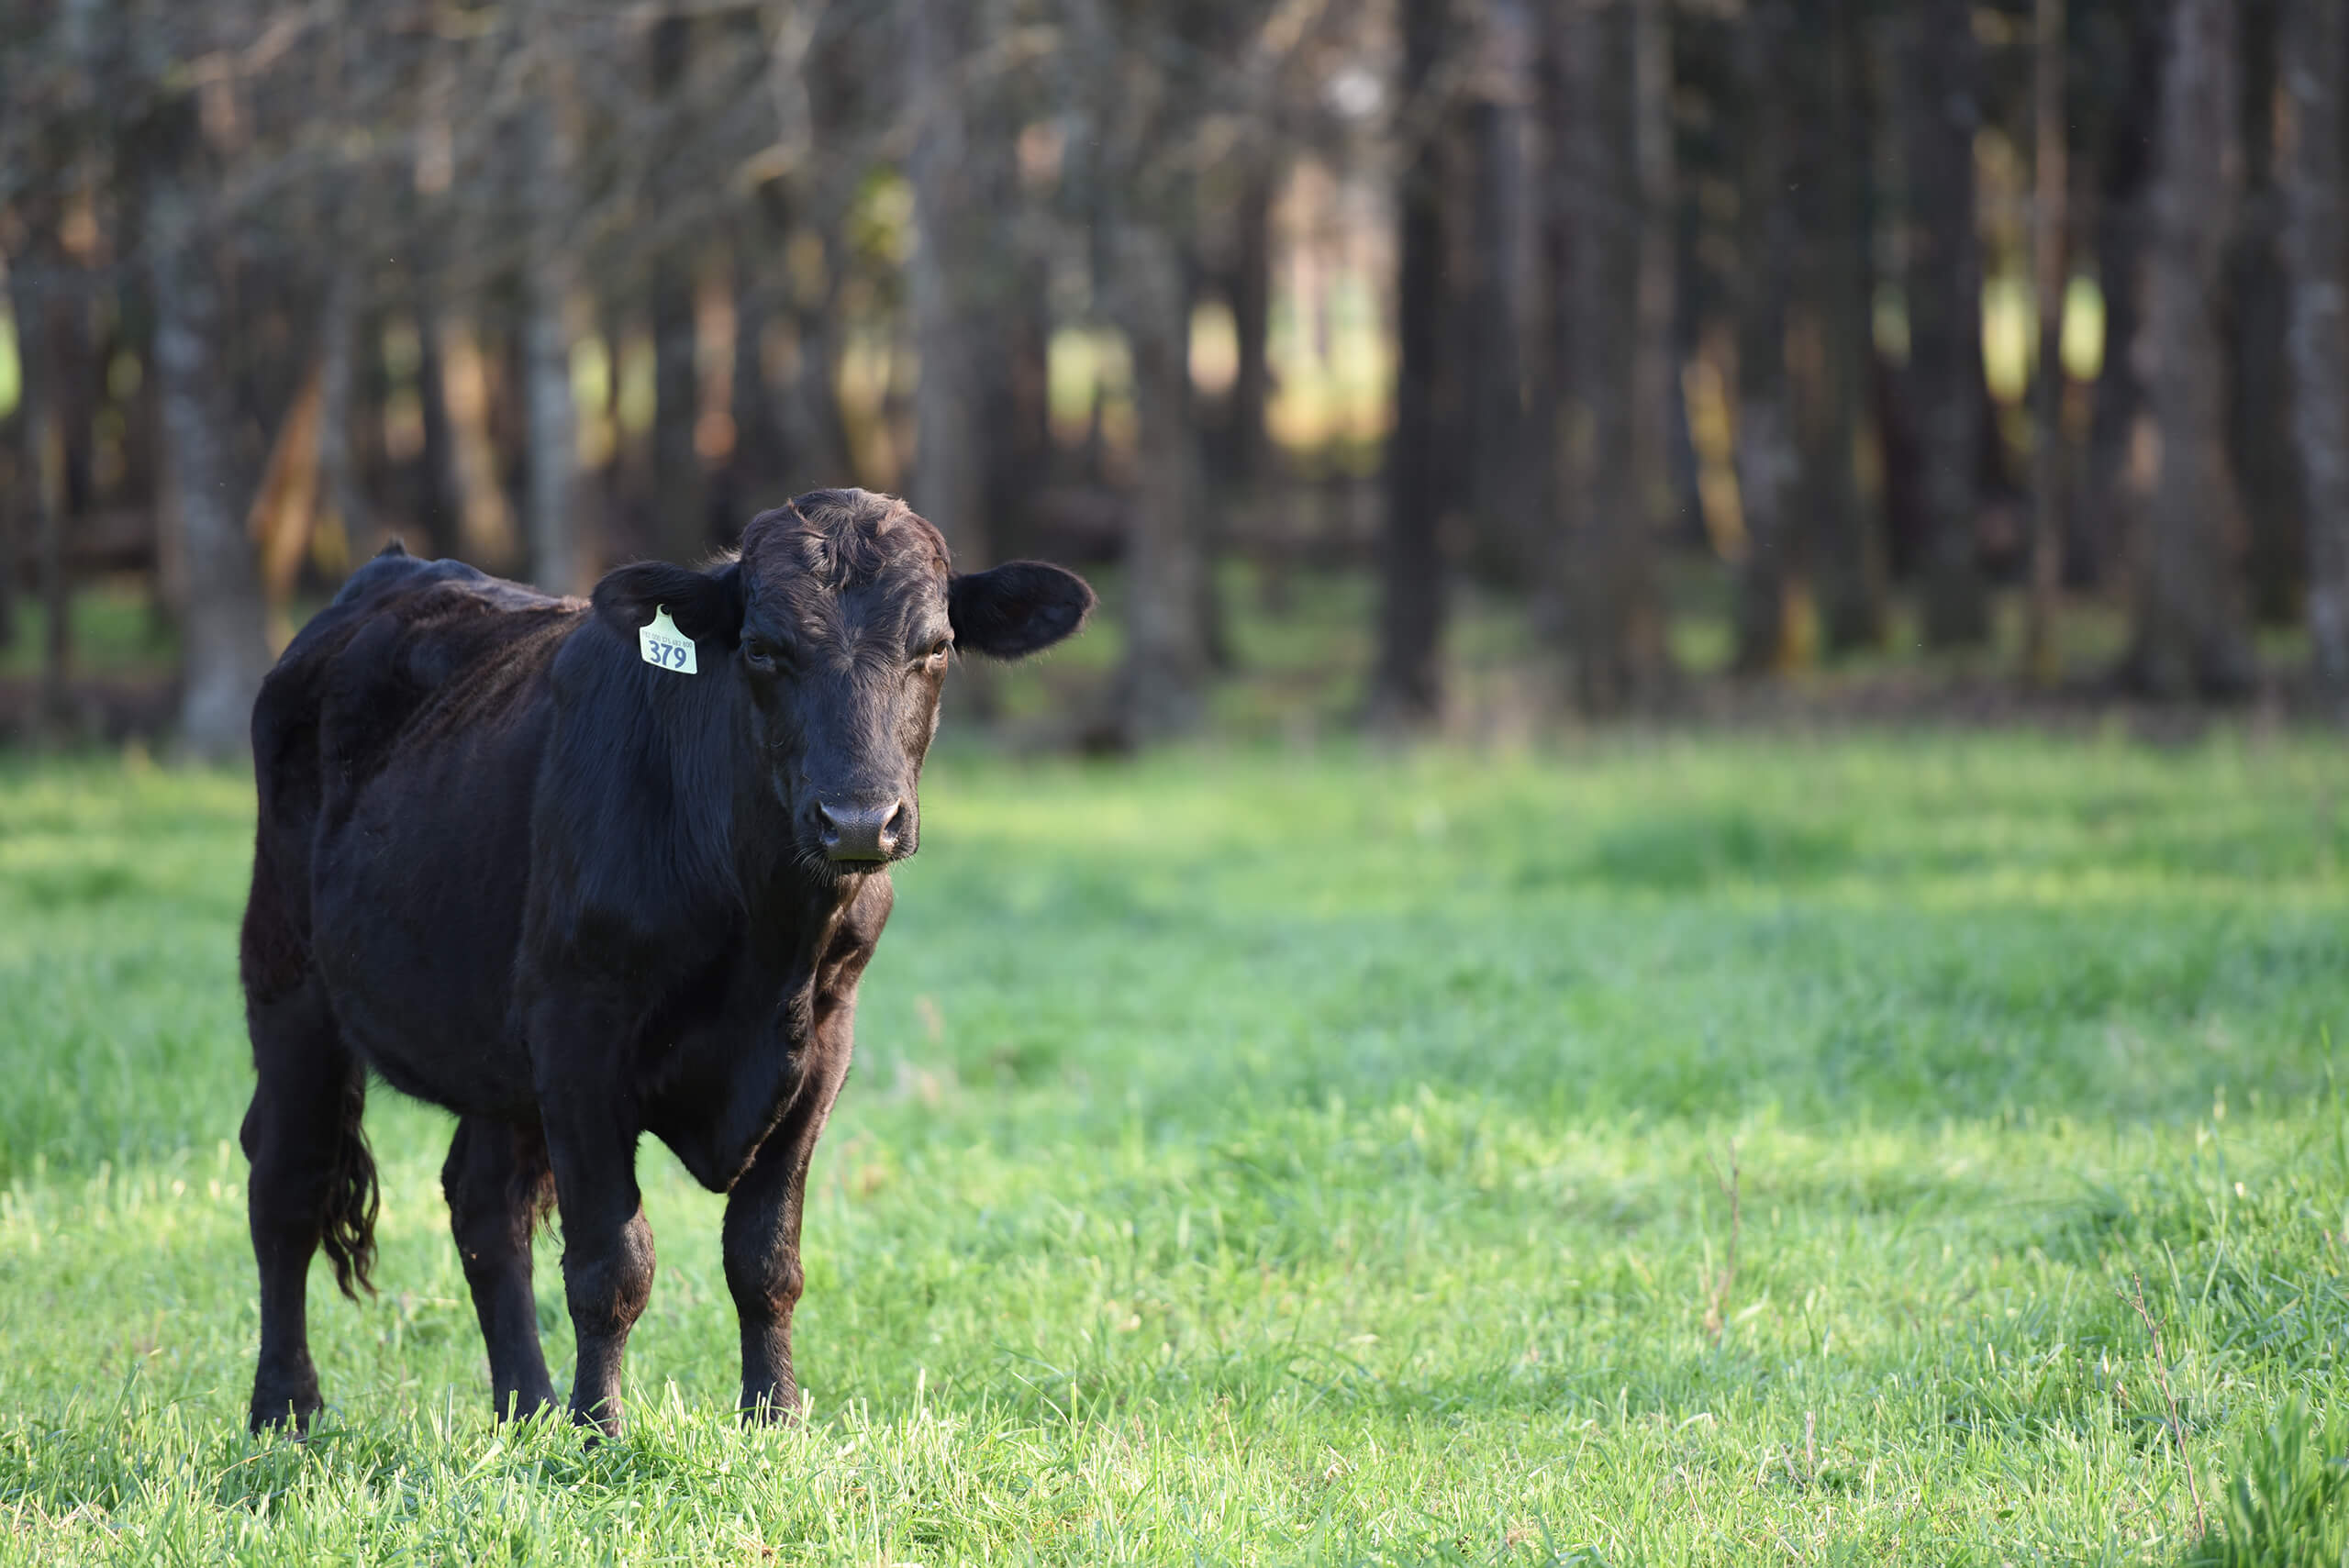 Bull on grass grassfed beef